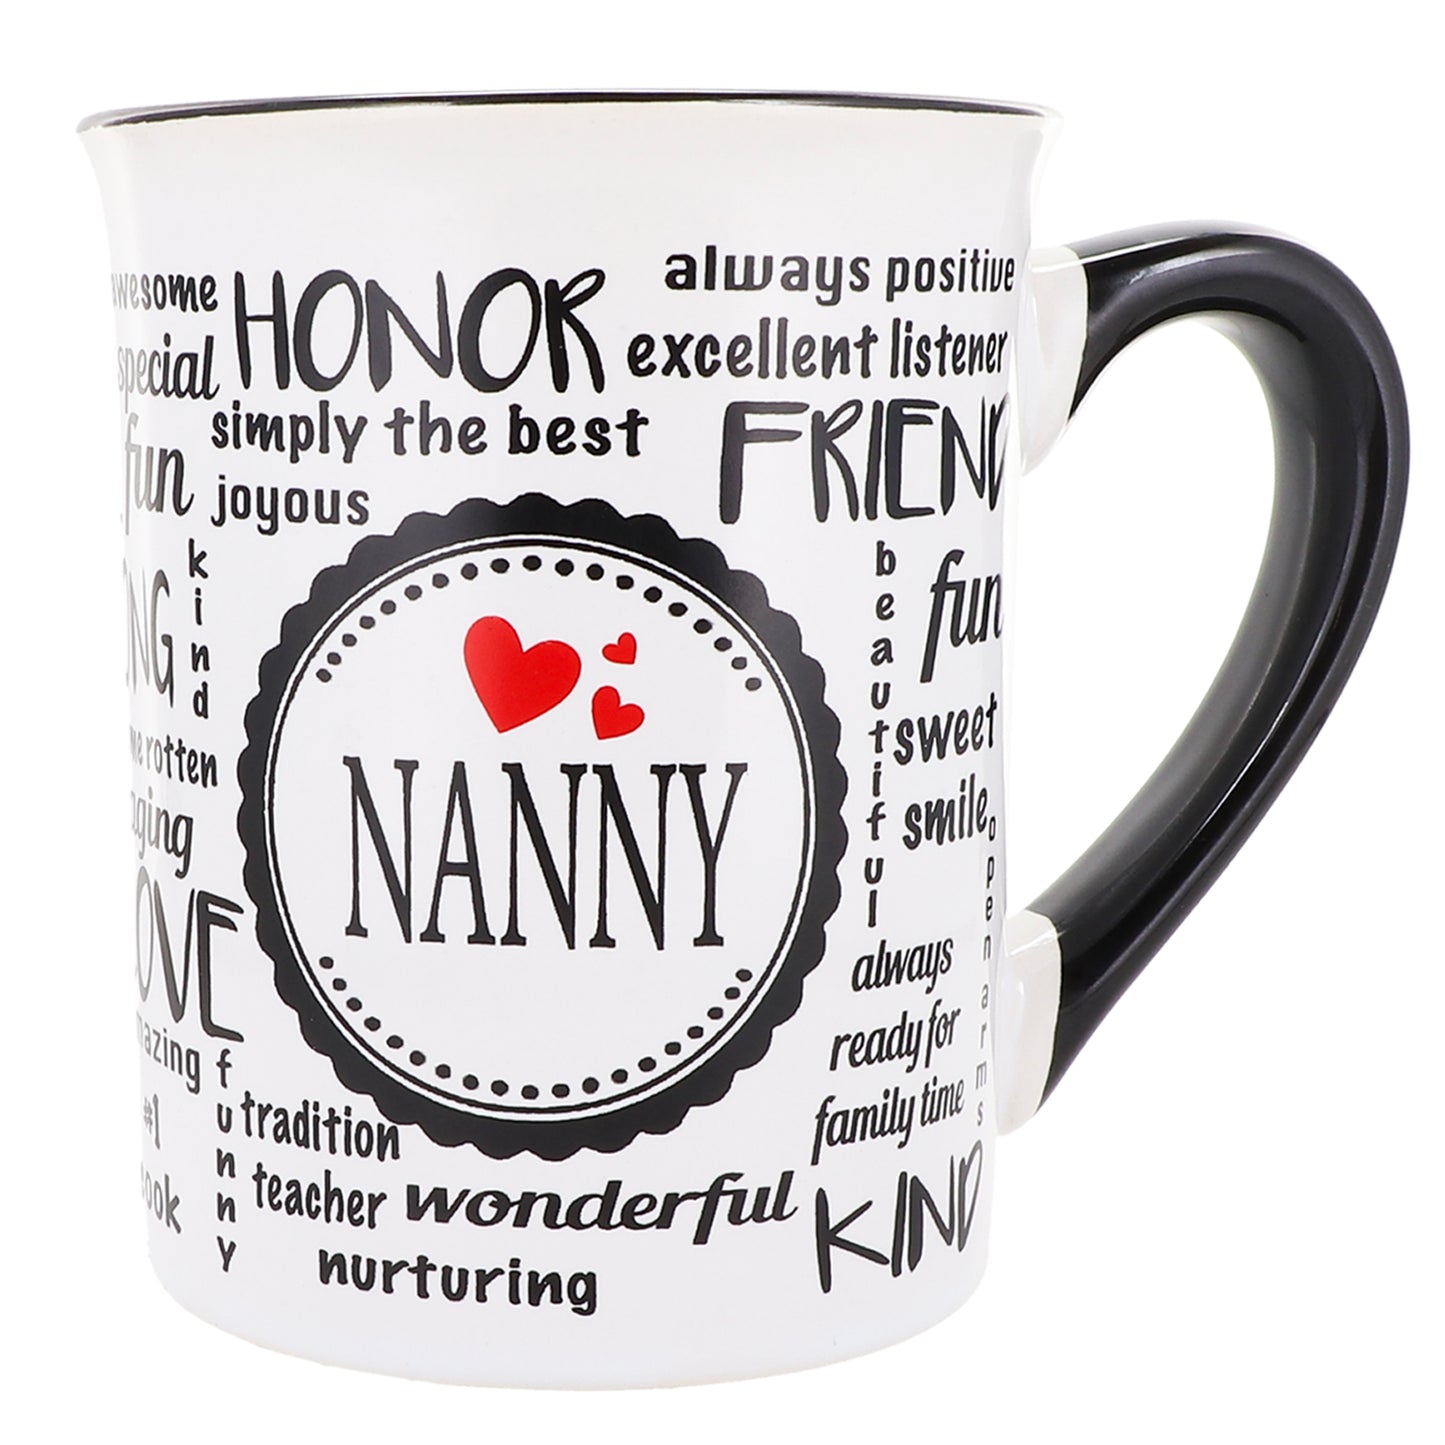 Cottage Creek Nanny Mug, Nanny Coffee Mug, Ceramic 16oz., 6" Multicolored